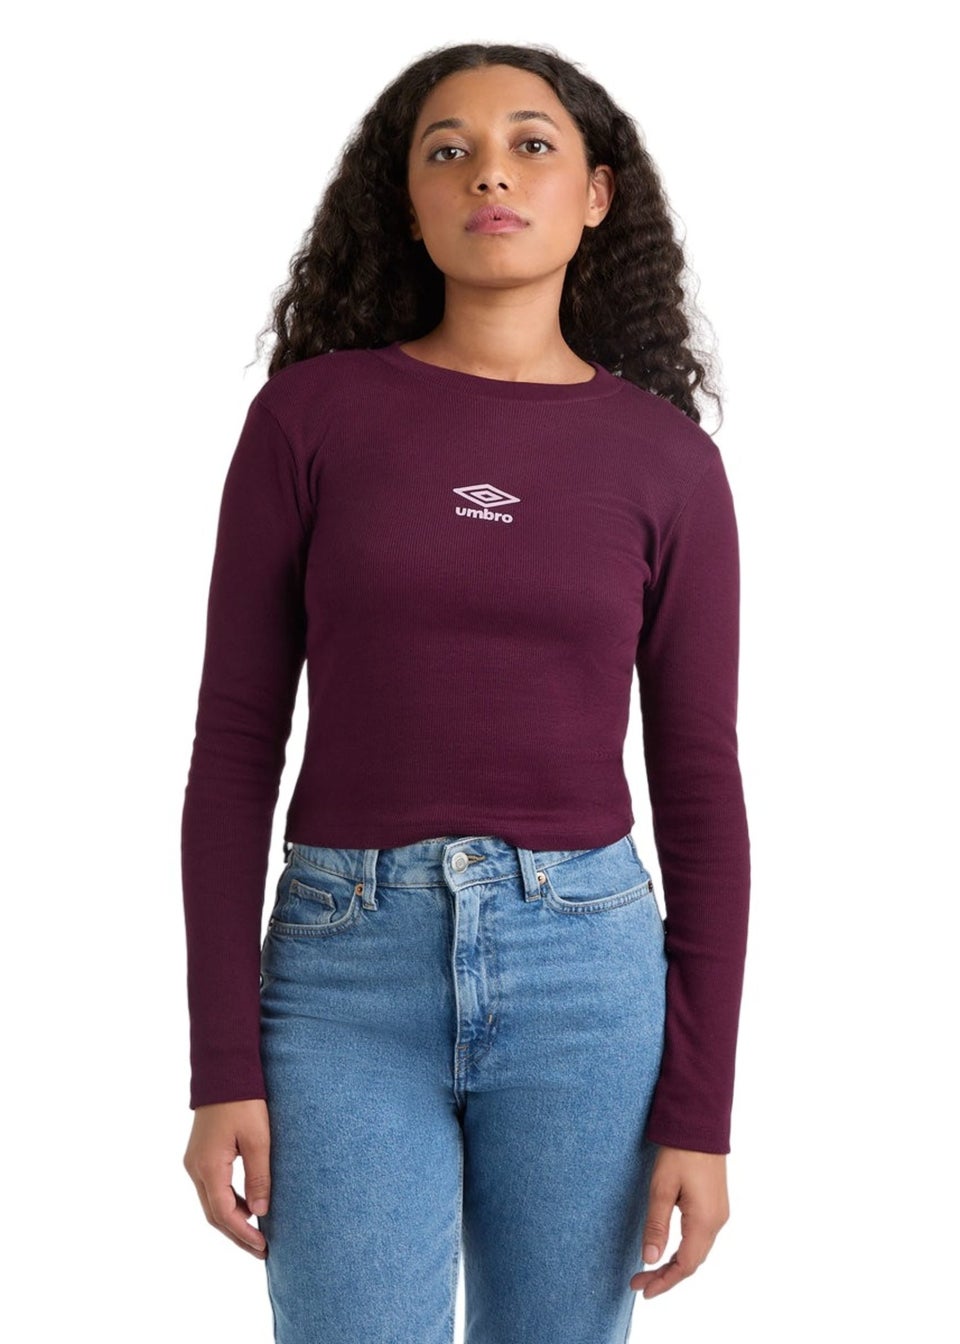 Umbro Purple Long-Sleeved Crop Top